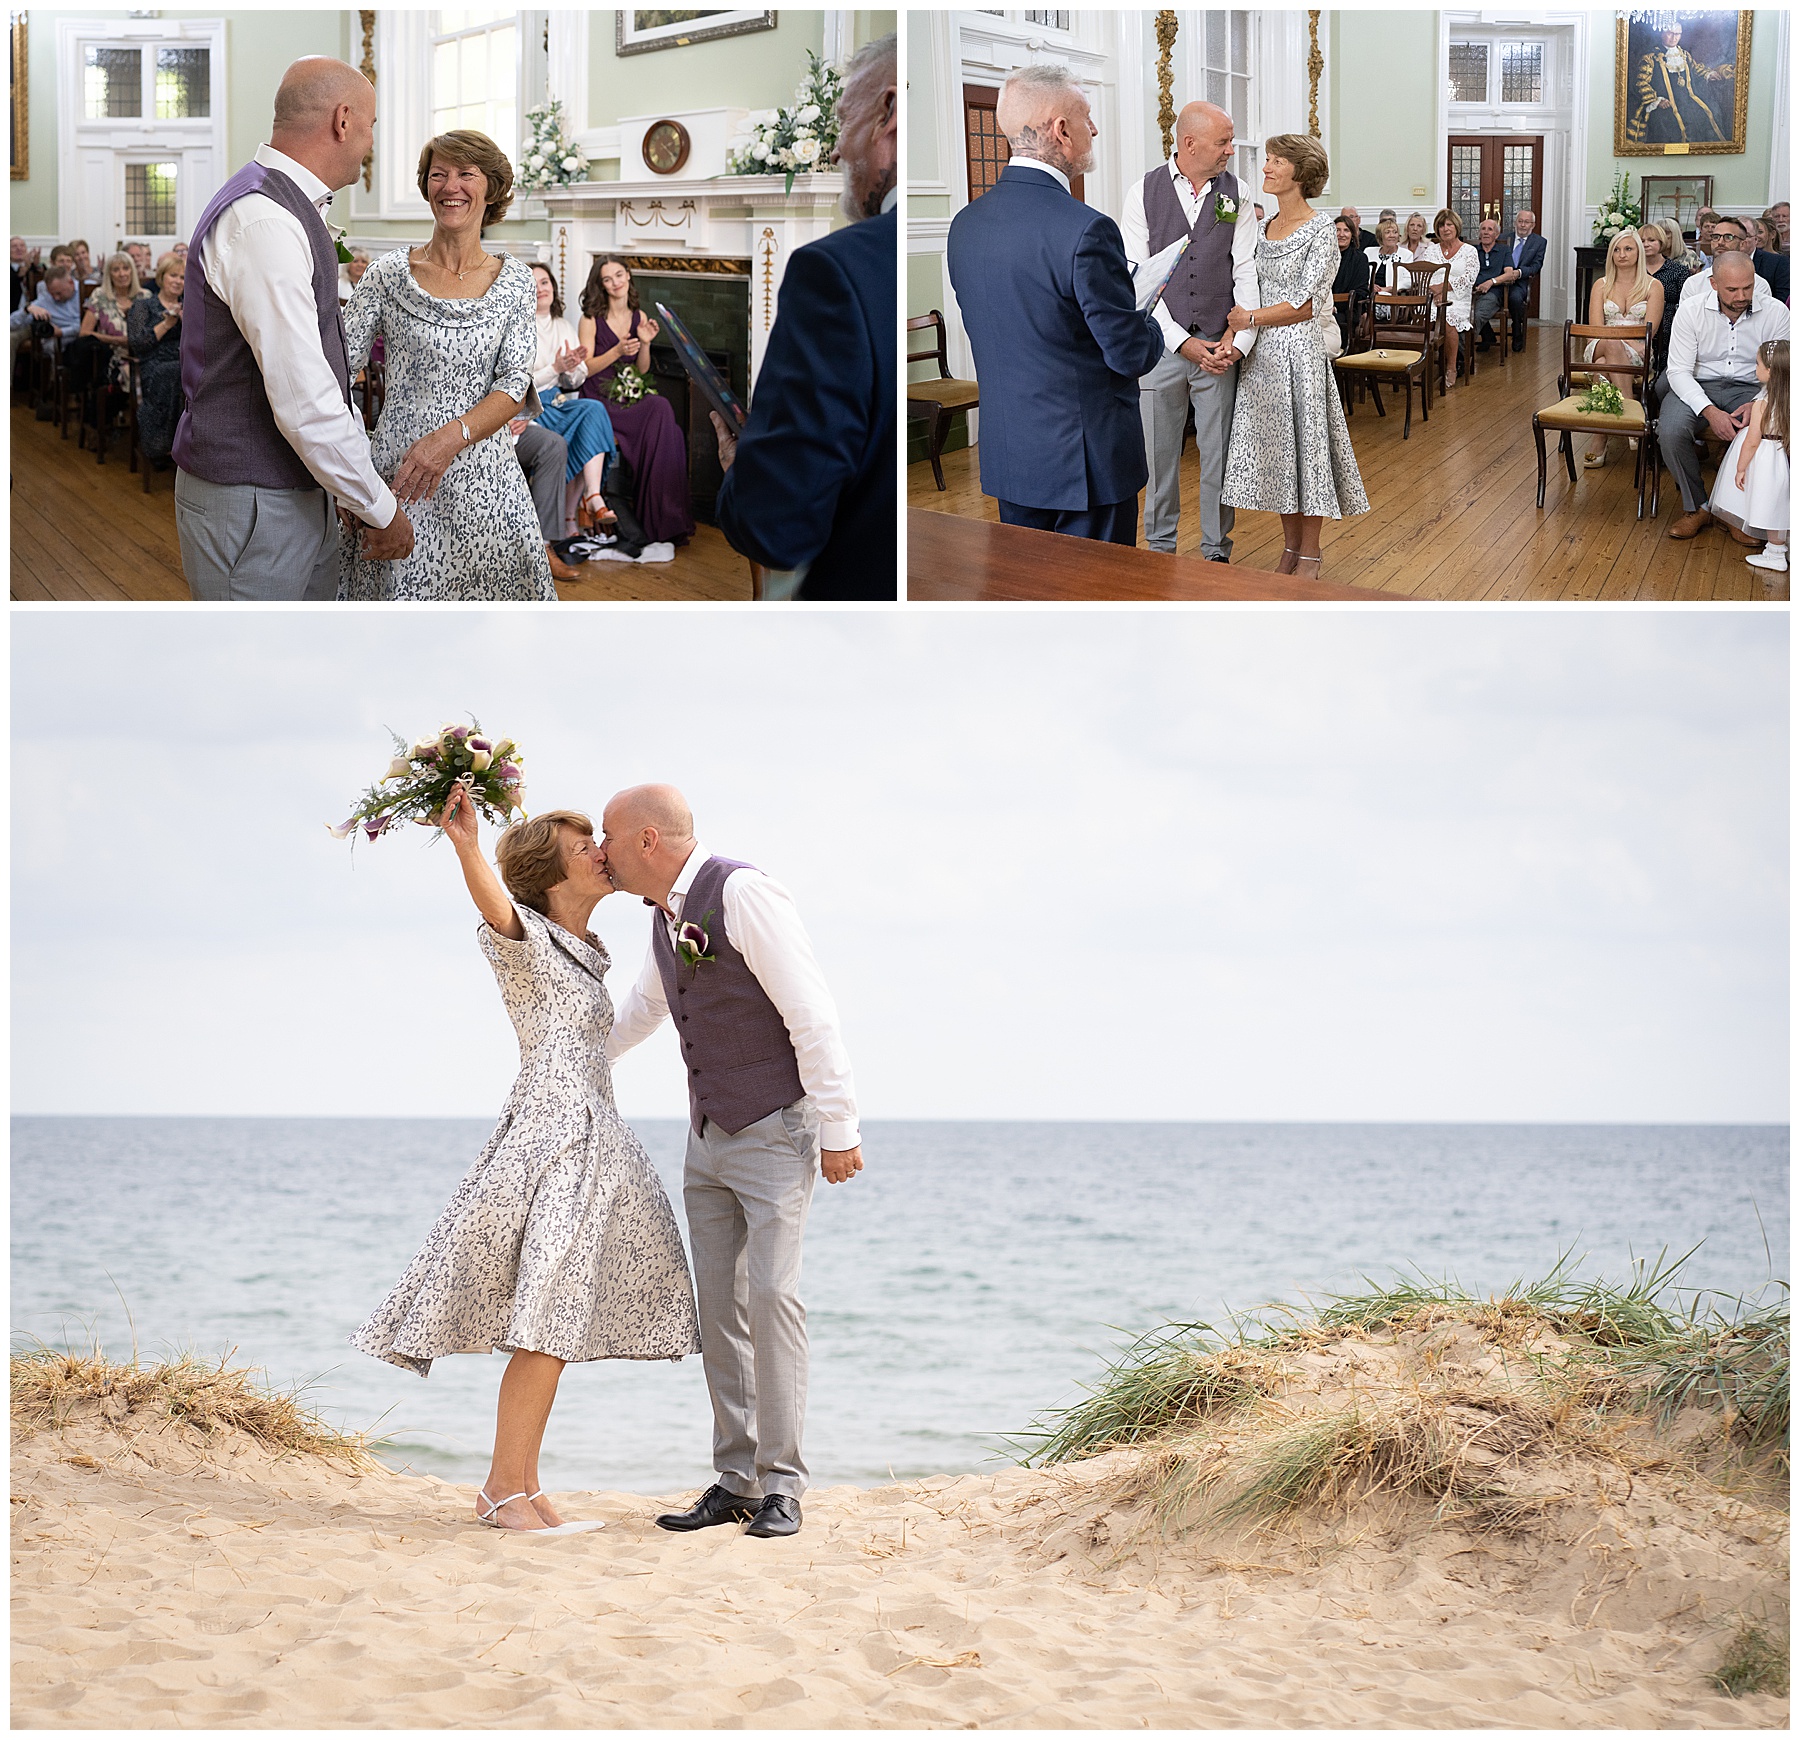 Bournemouth registry office wedding then sandbanks beach